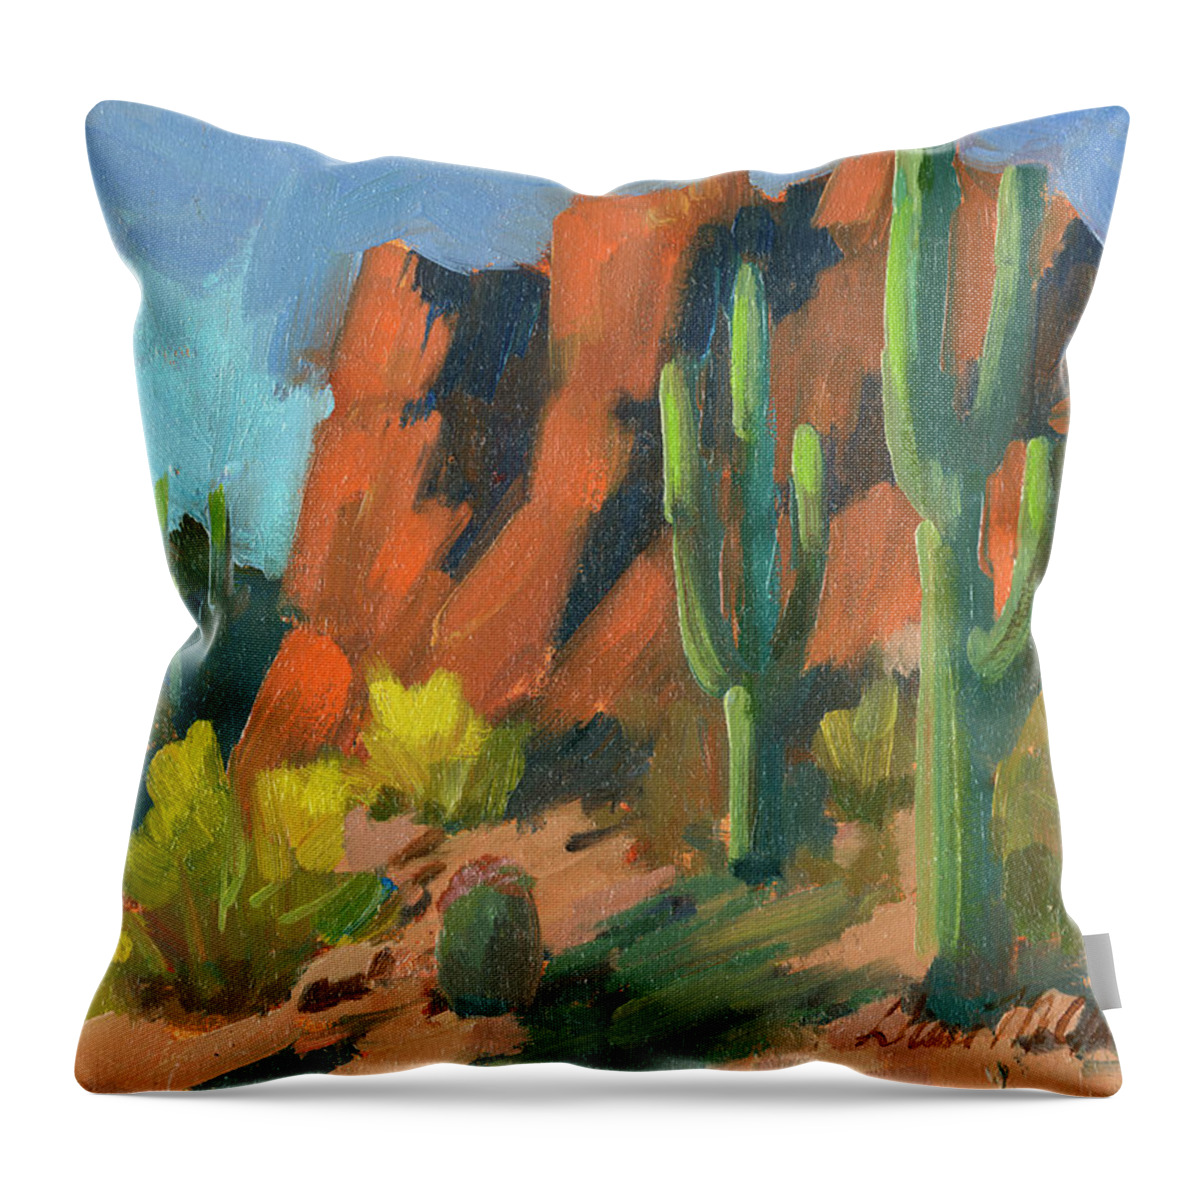 Saguaro Cactus Throw Pillow featuring the painting Saguaro Cactus 1 by Diane McClary